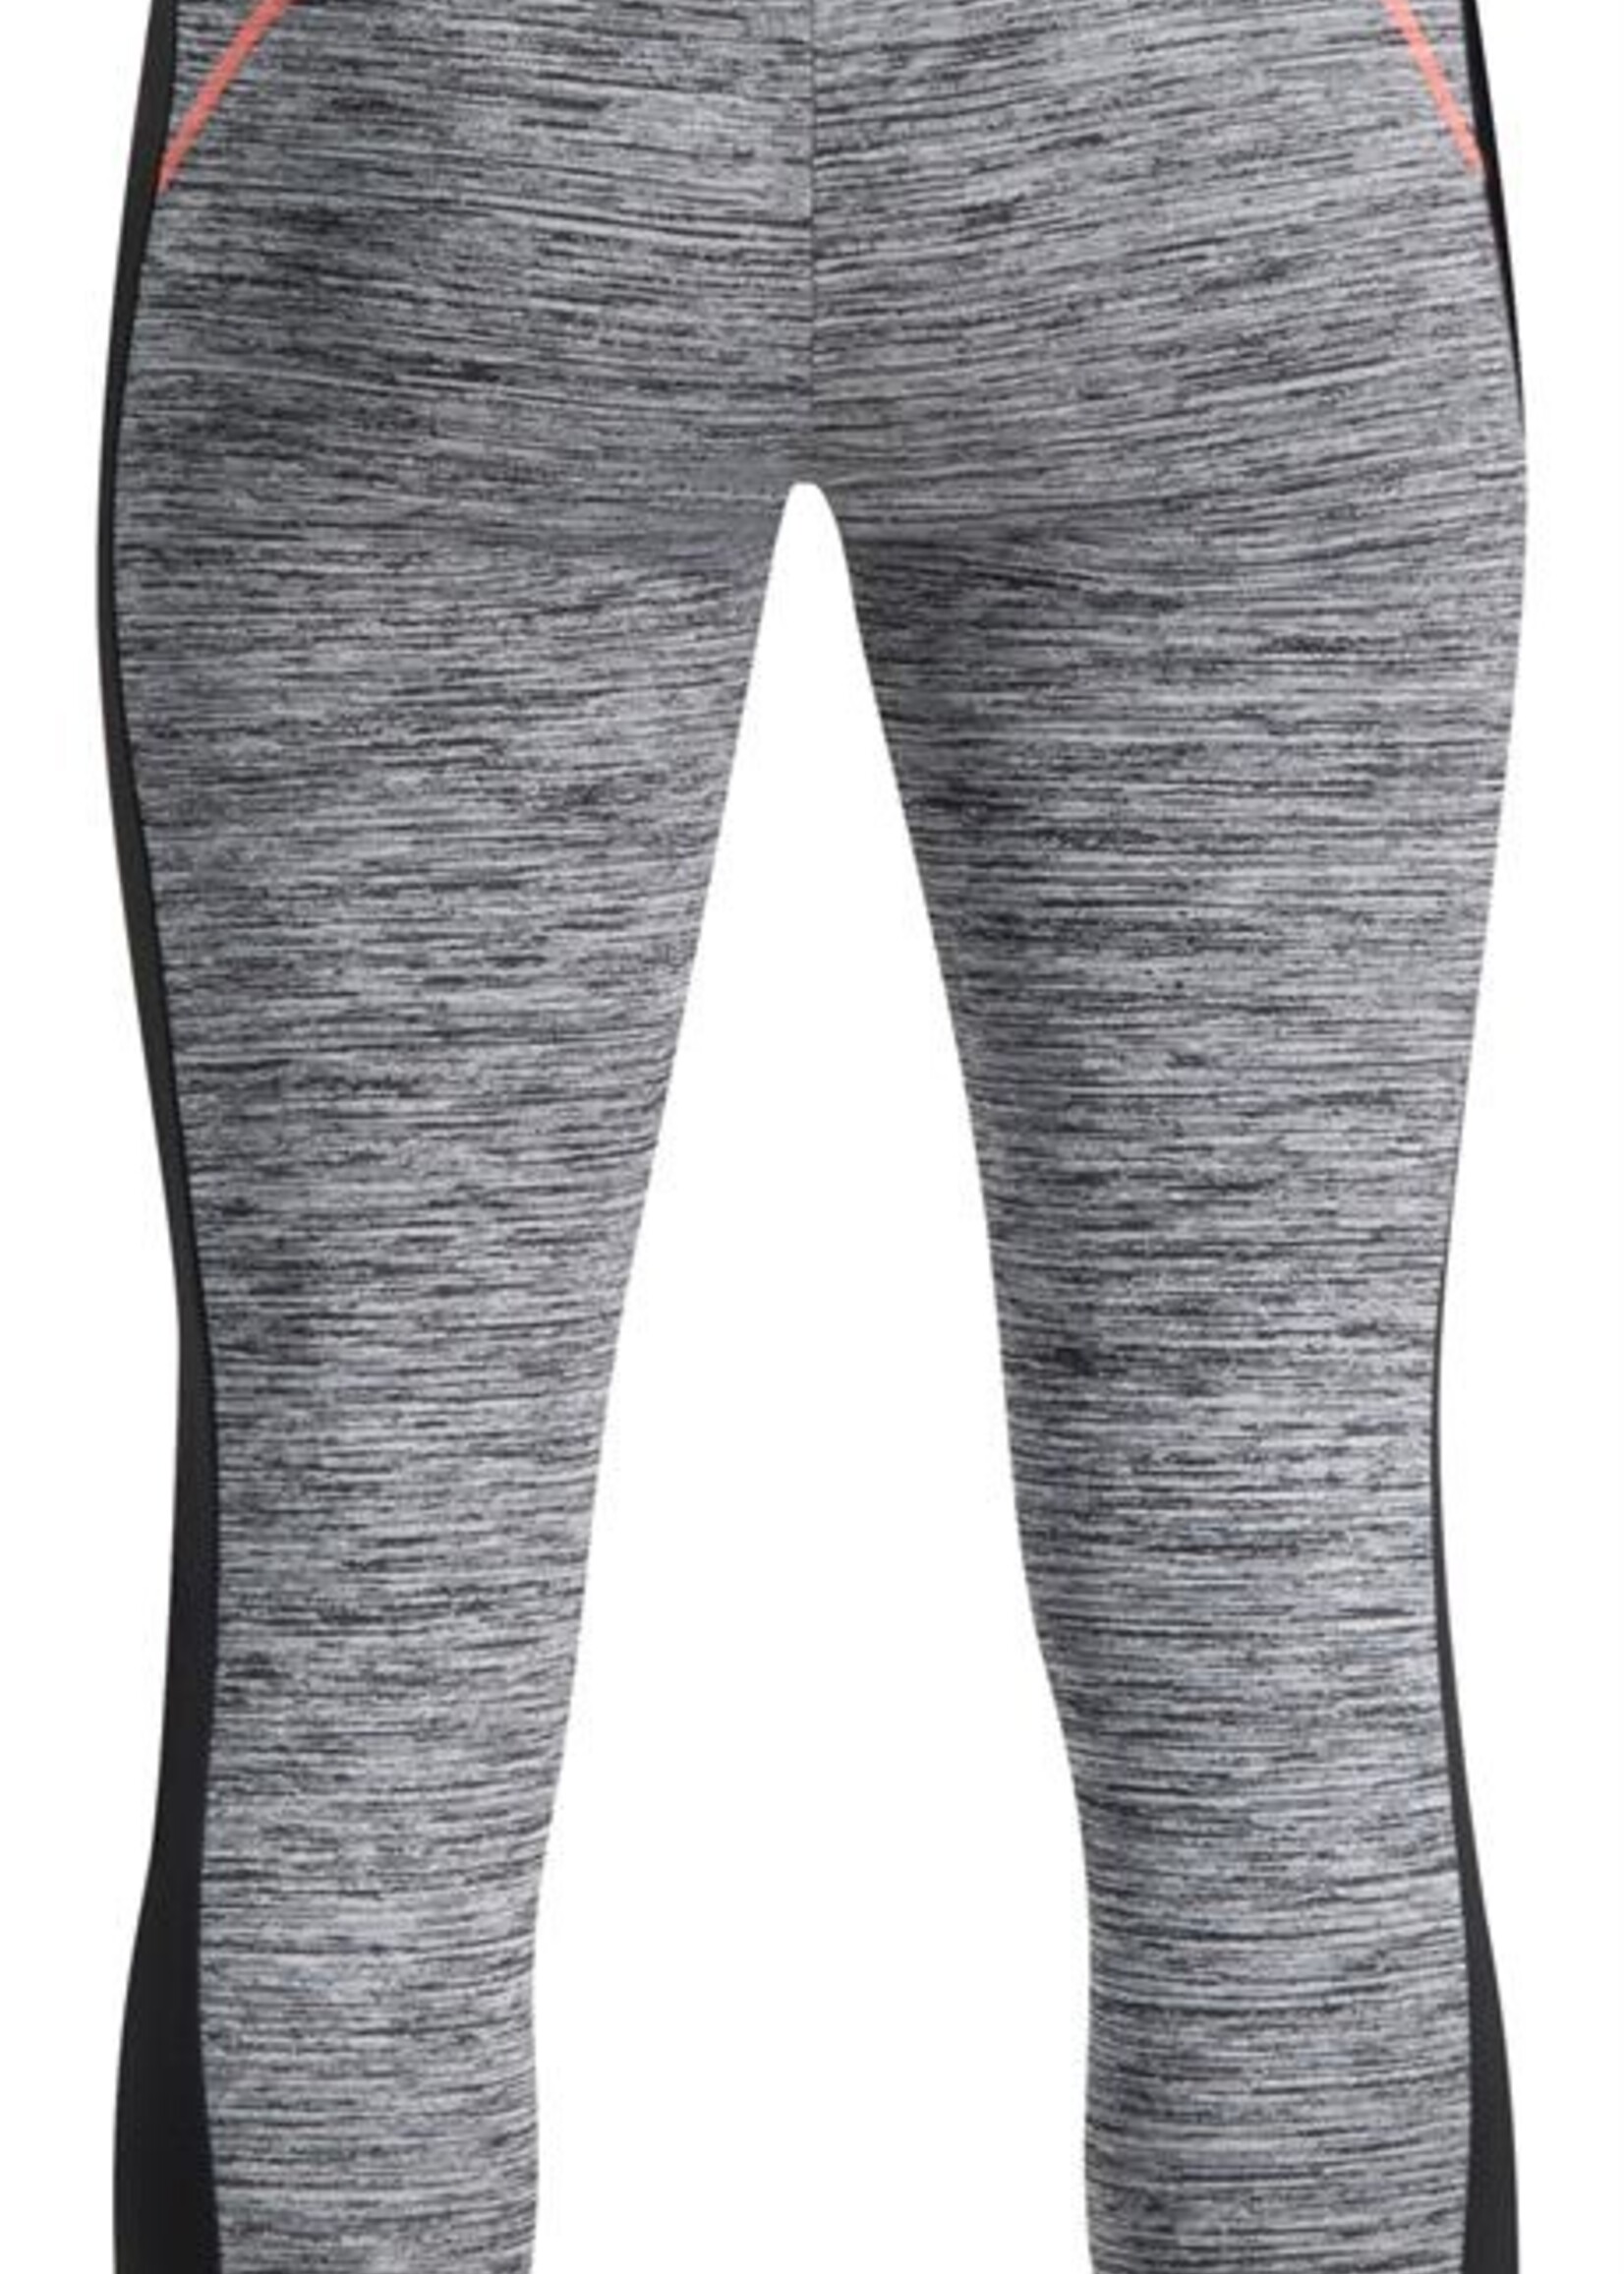 Esprit Sports legging grey